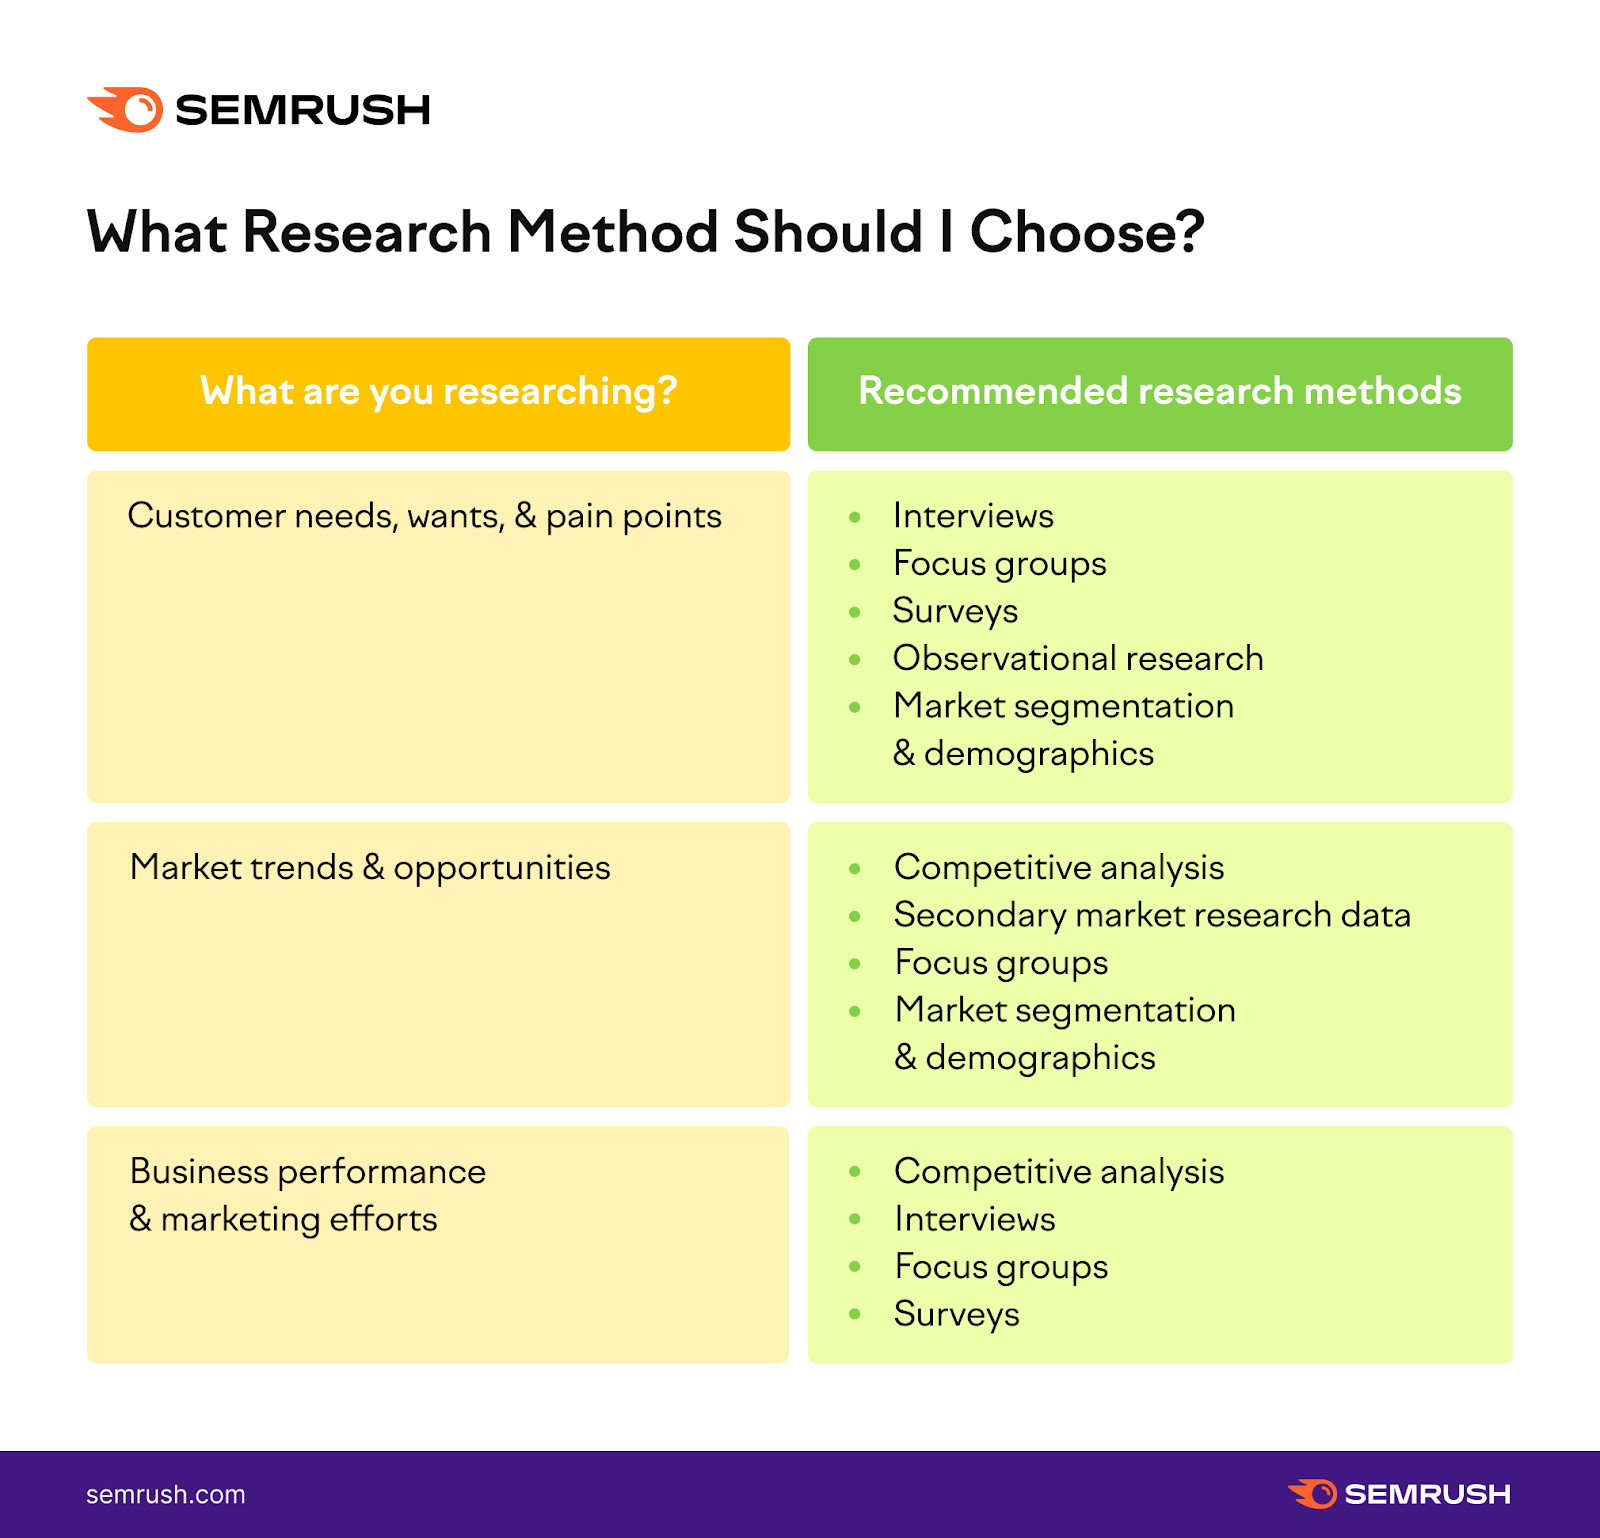 market research methods